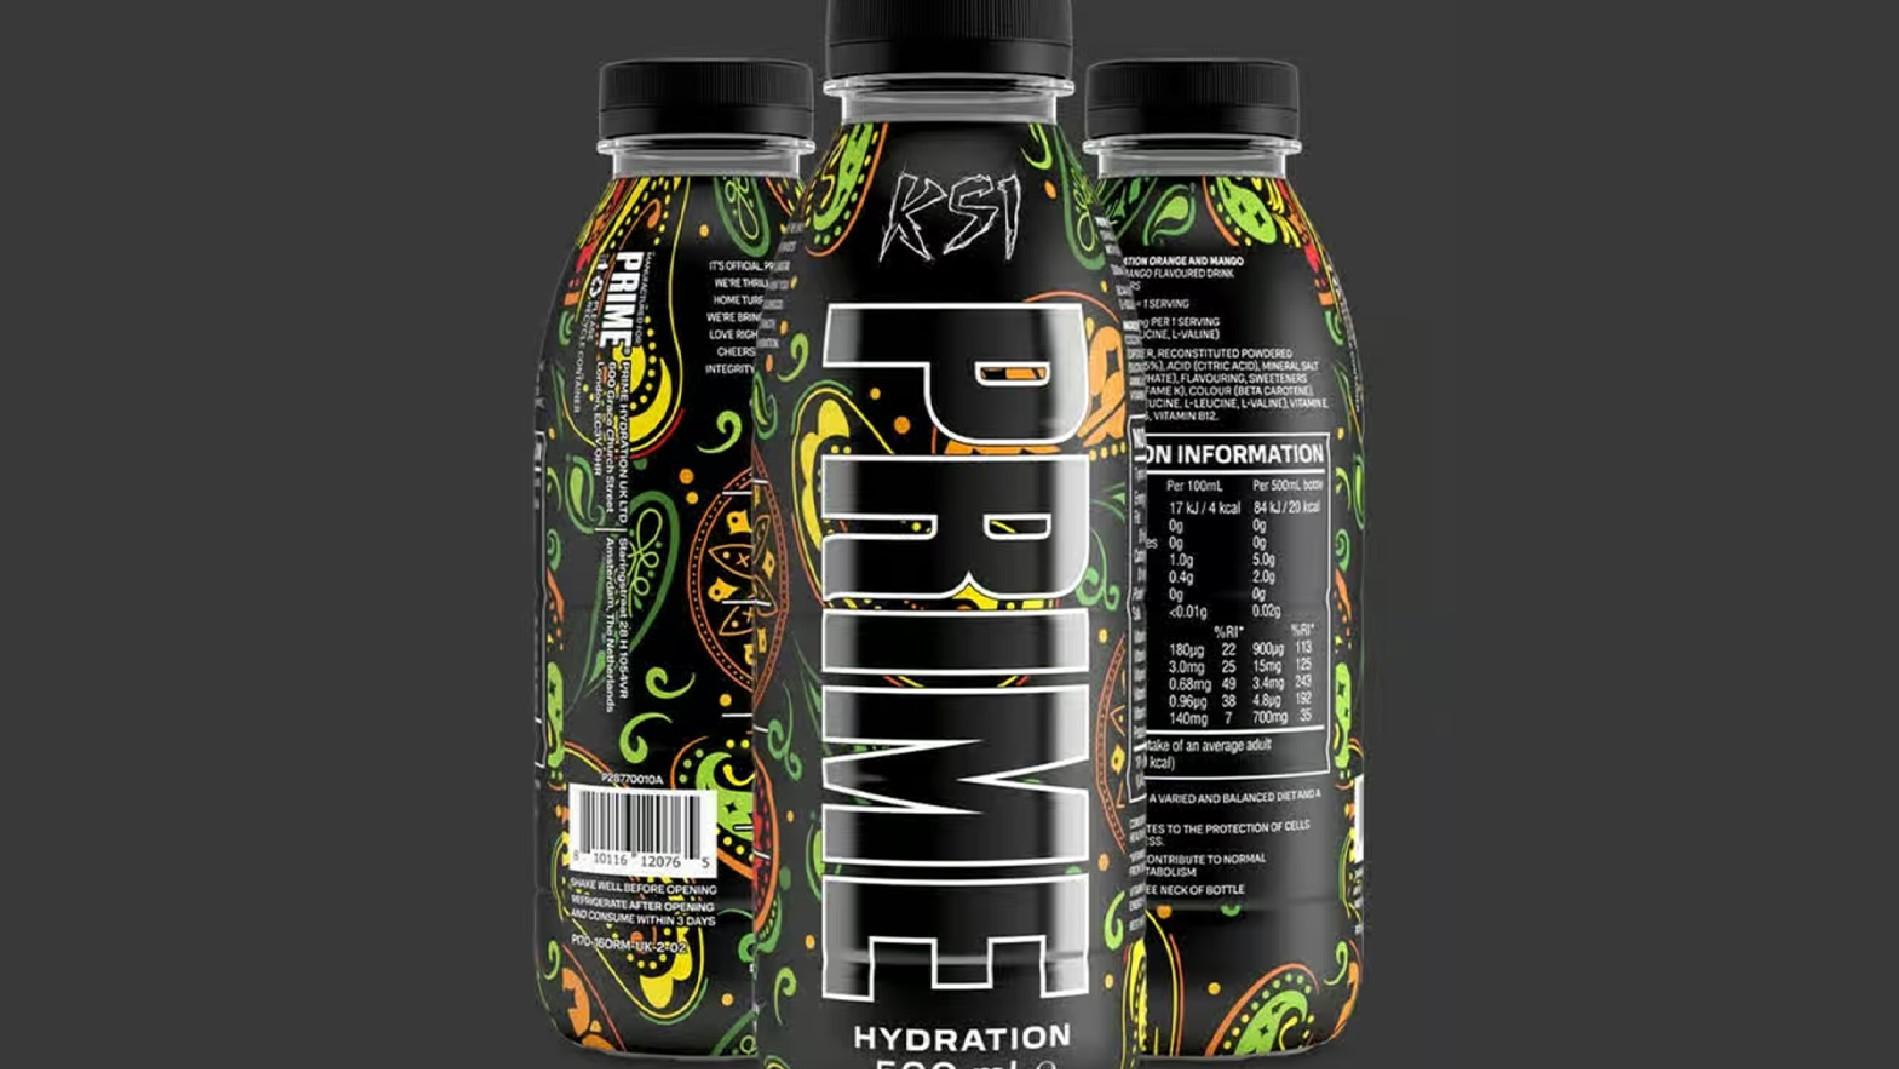 KSI Reveals Limited Edition Prime Hydration Flavor, 41% OFF